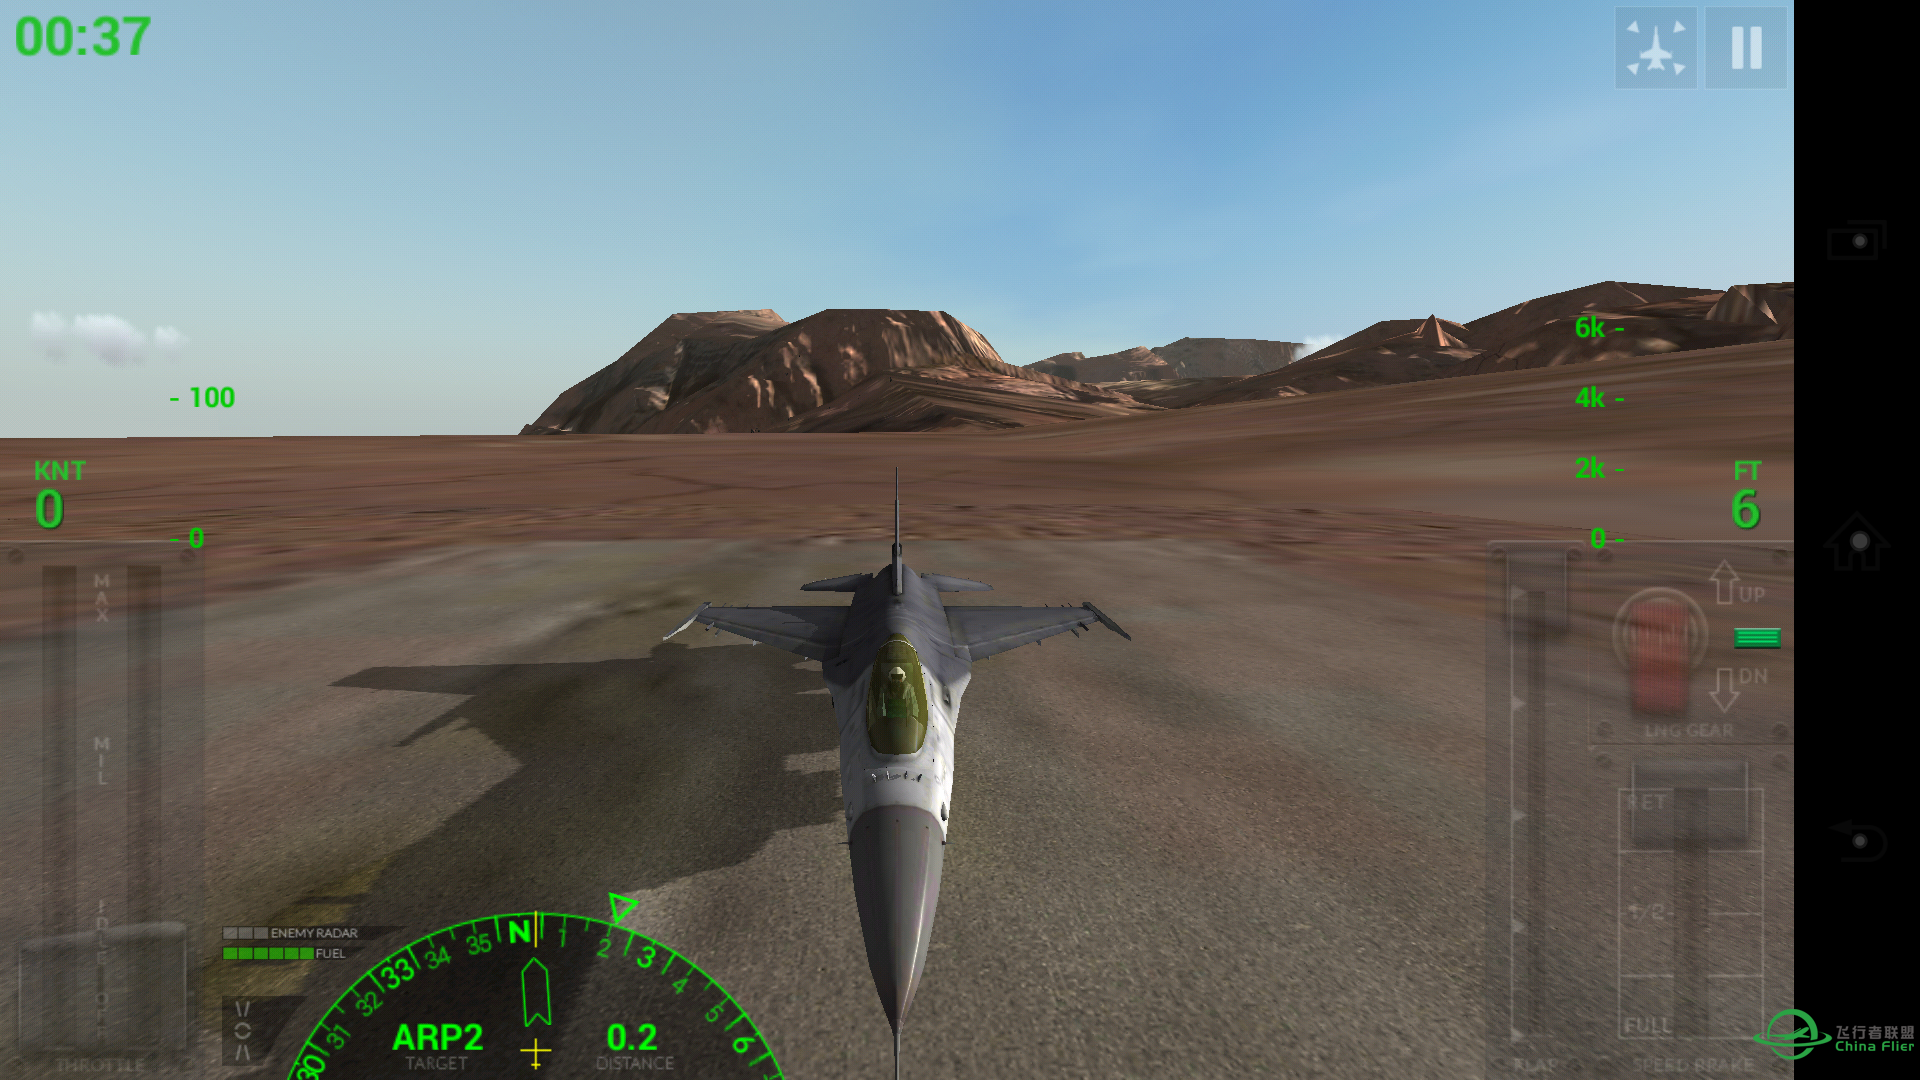 [截图而已]F18 Carrier Landing2 Pro-721 